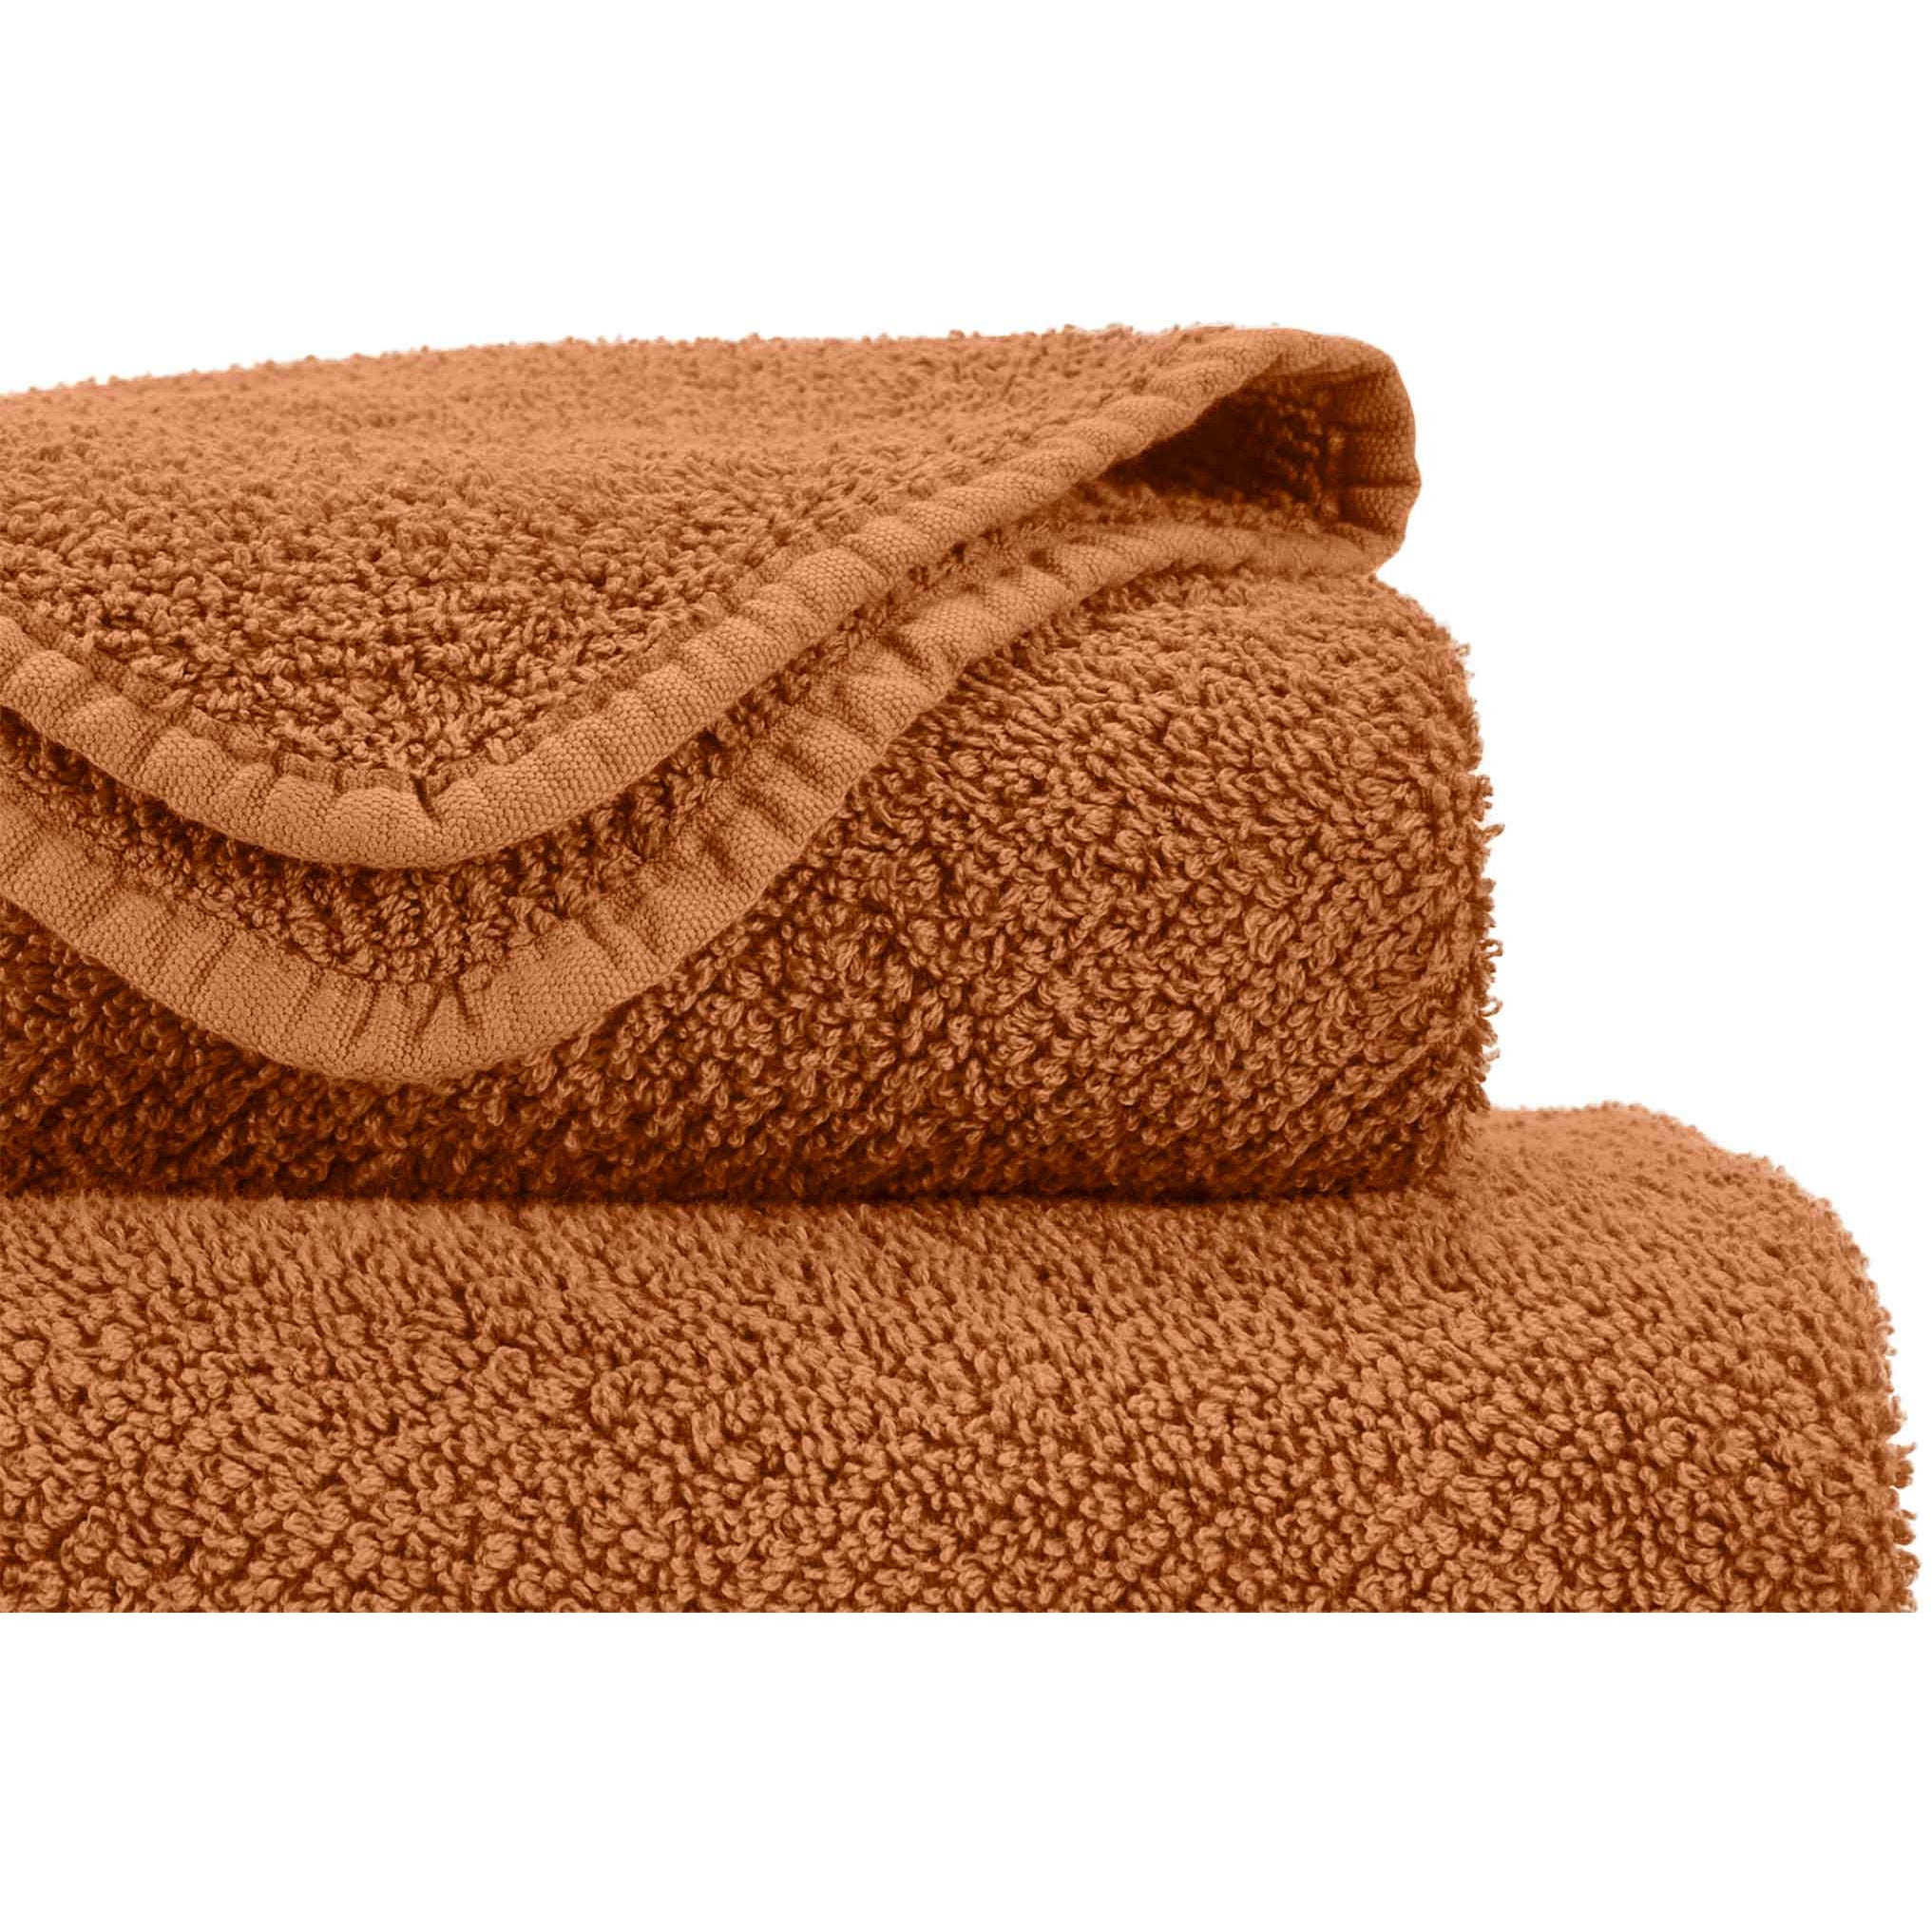 Abyss Super Pile Towels Caramel Color 737-Bath Sheet, 40x72